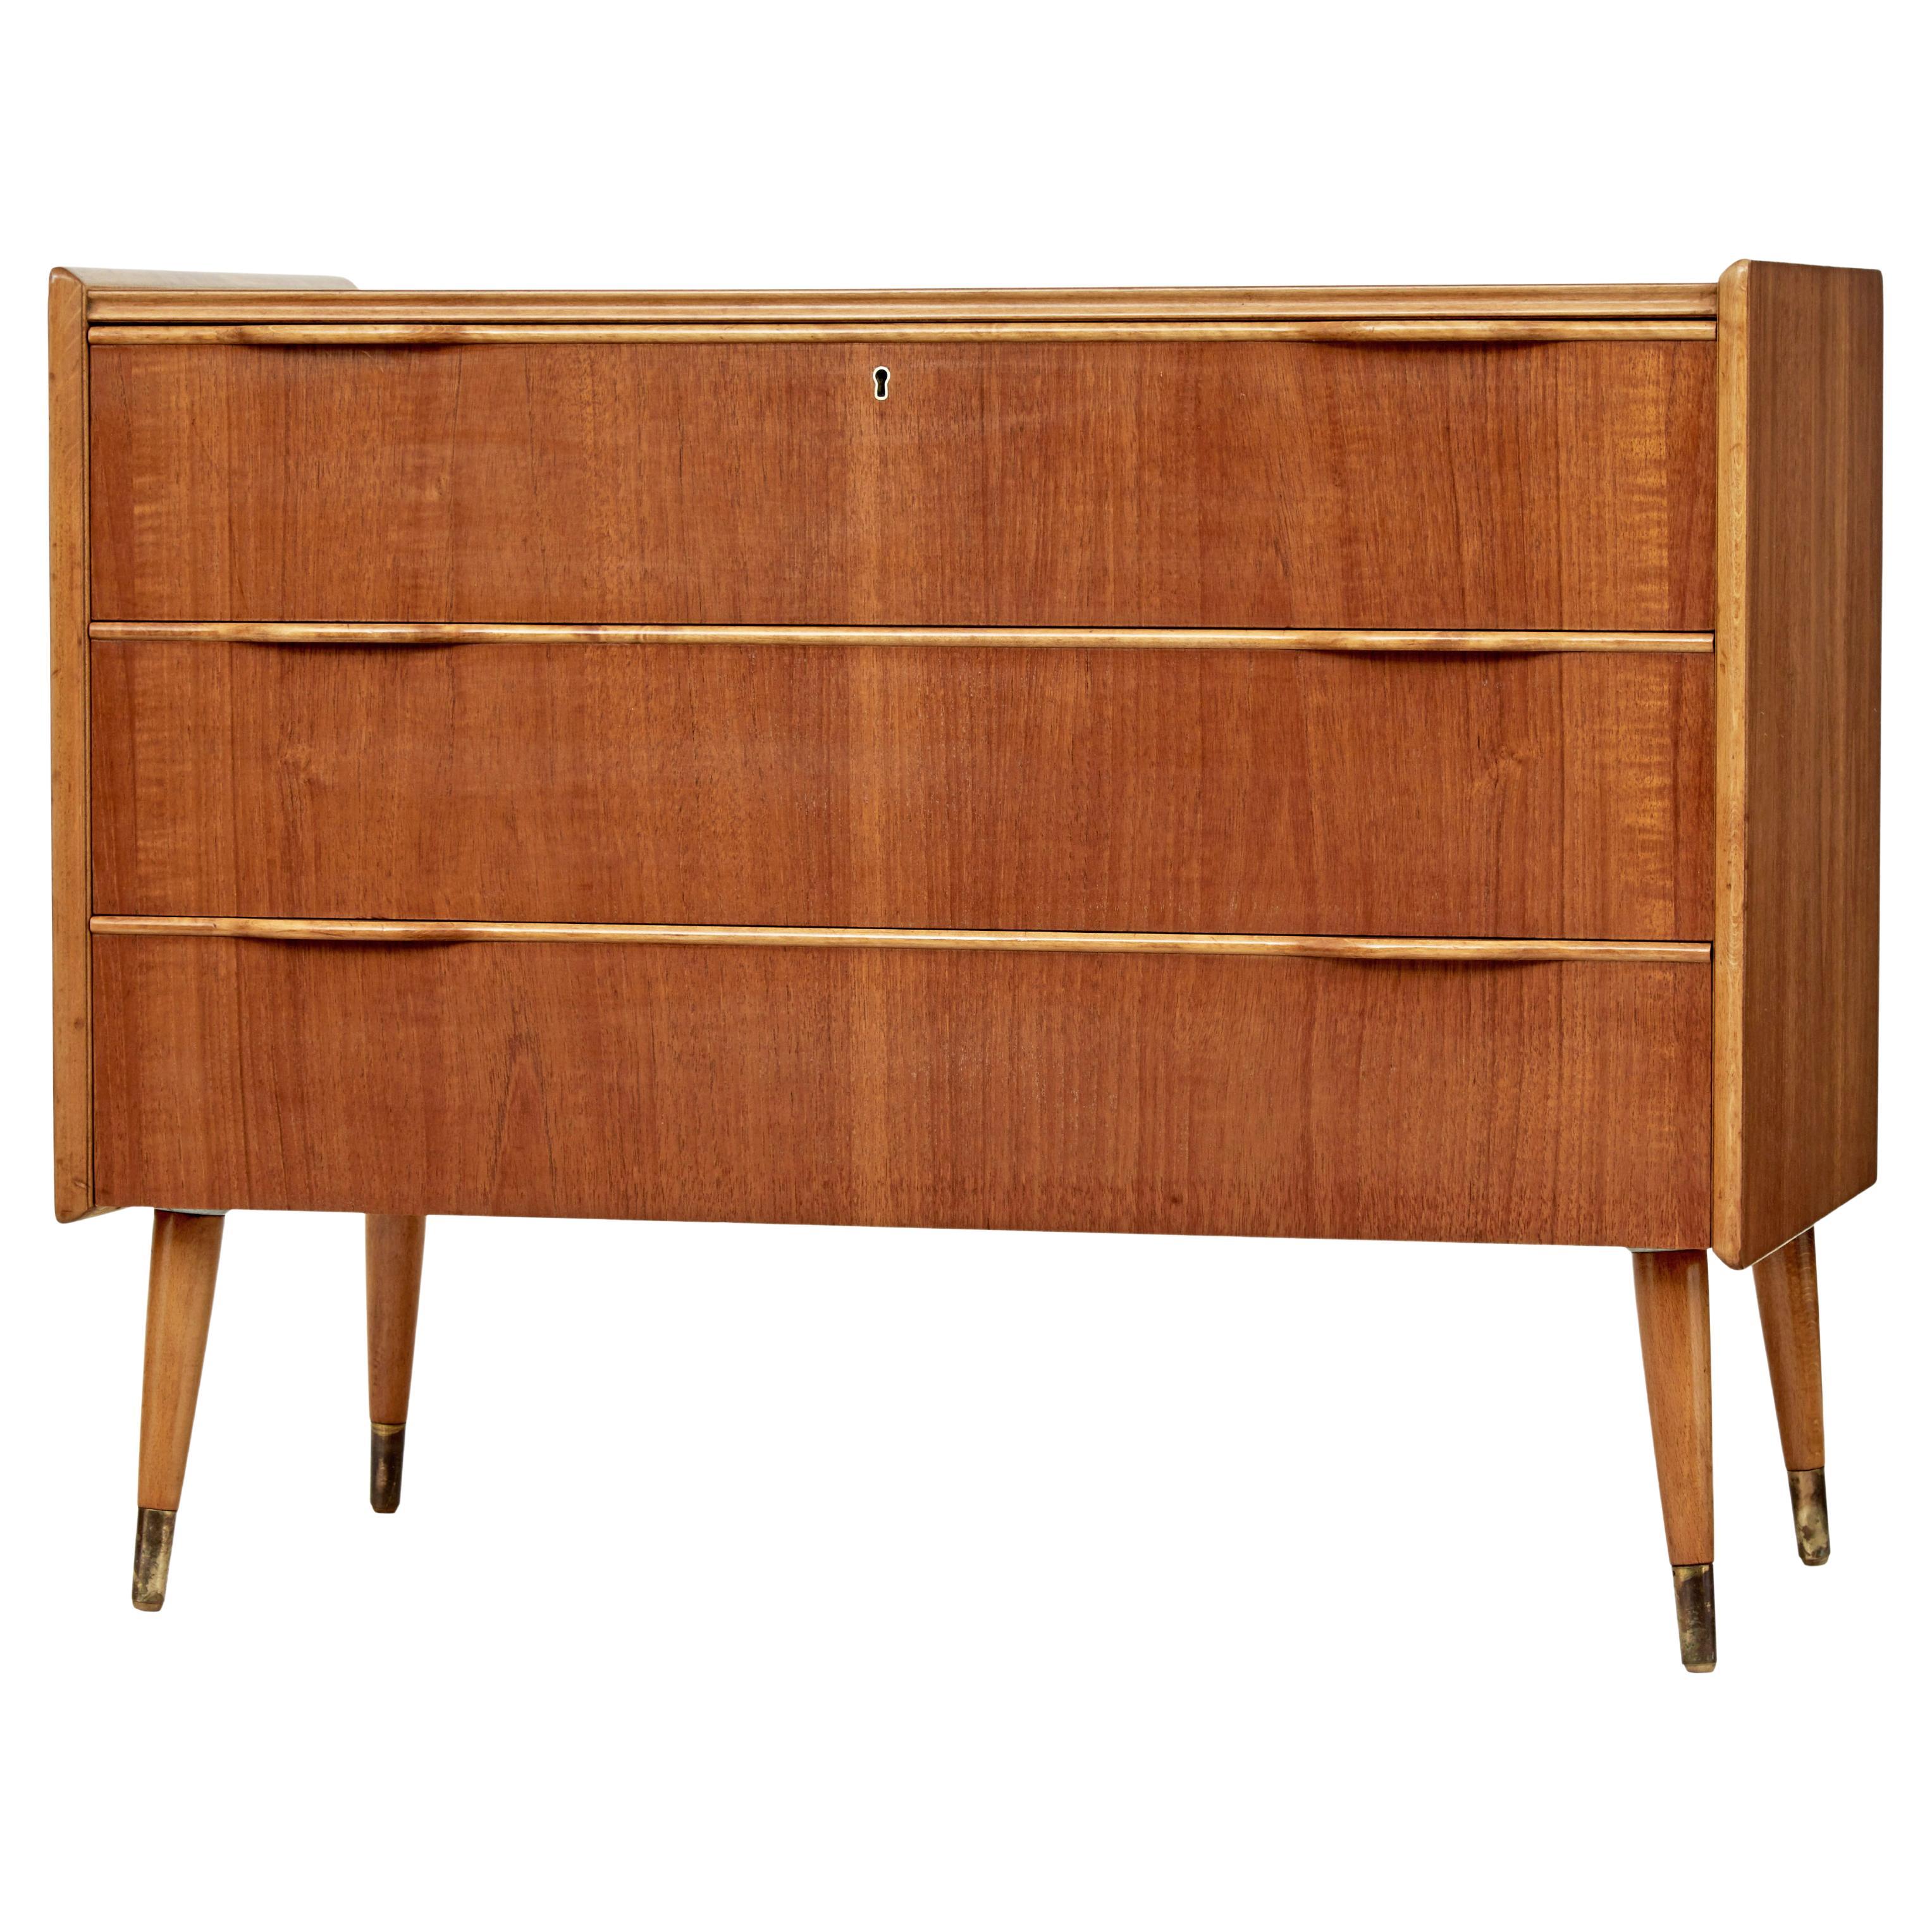 Mid 20th century Danish teak chest of drawers by Henning Jorgensen For Sale